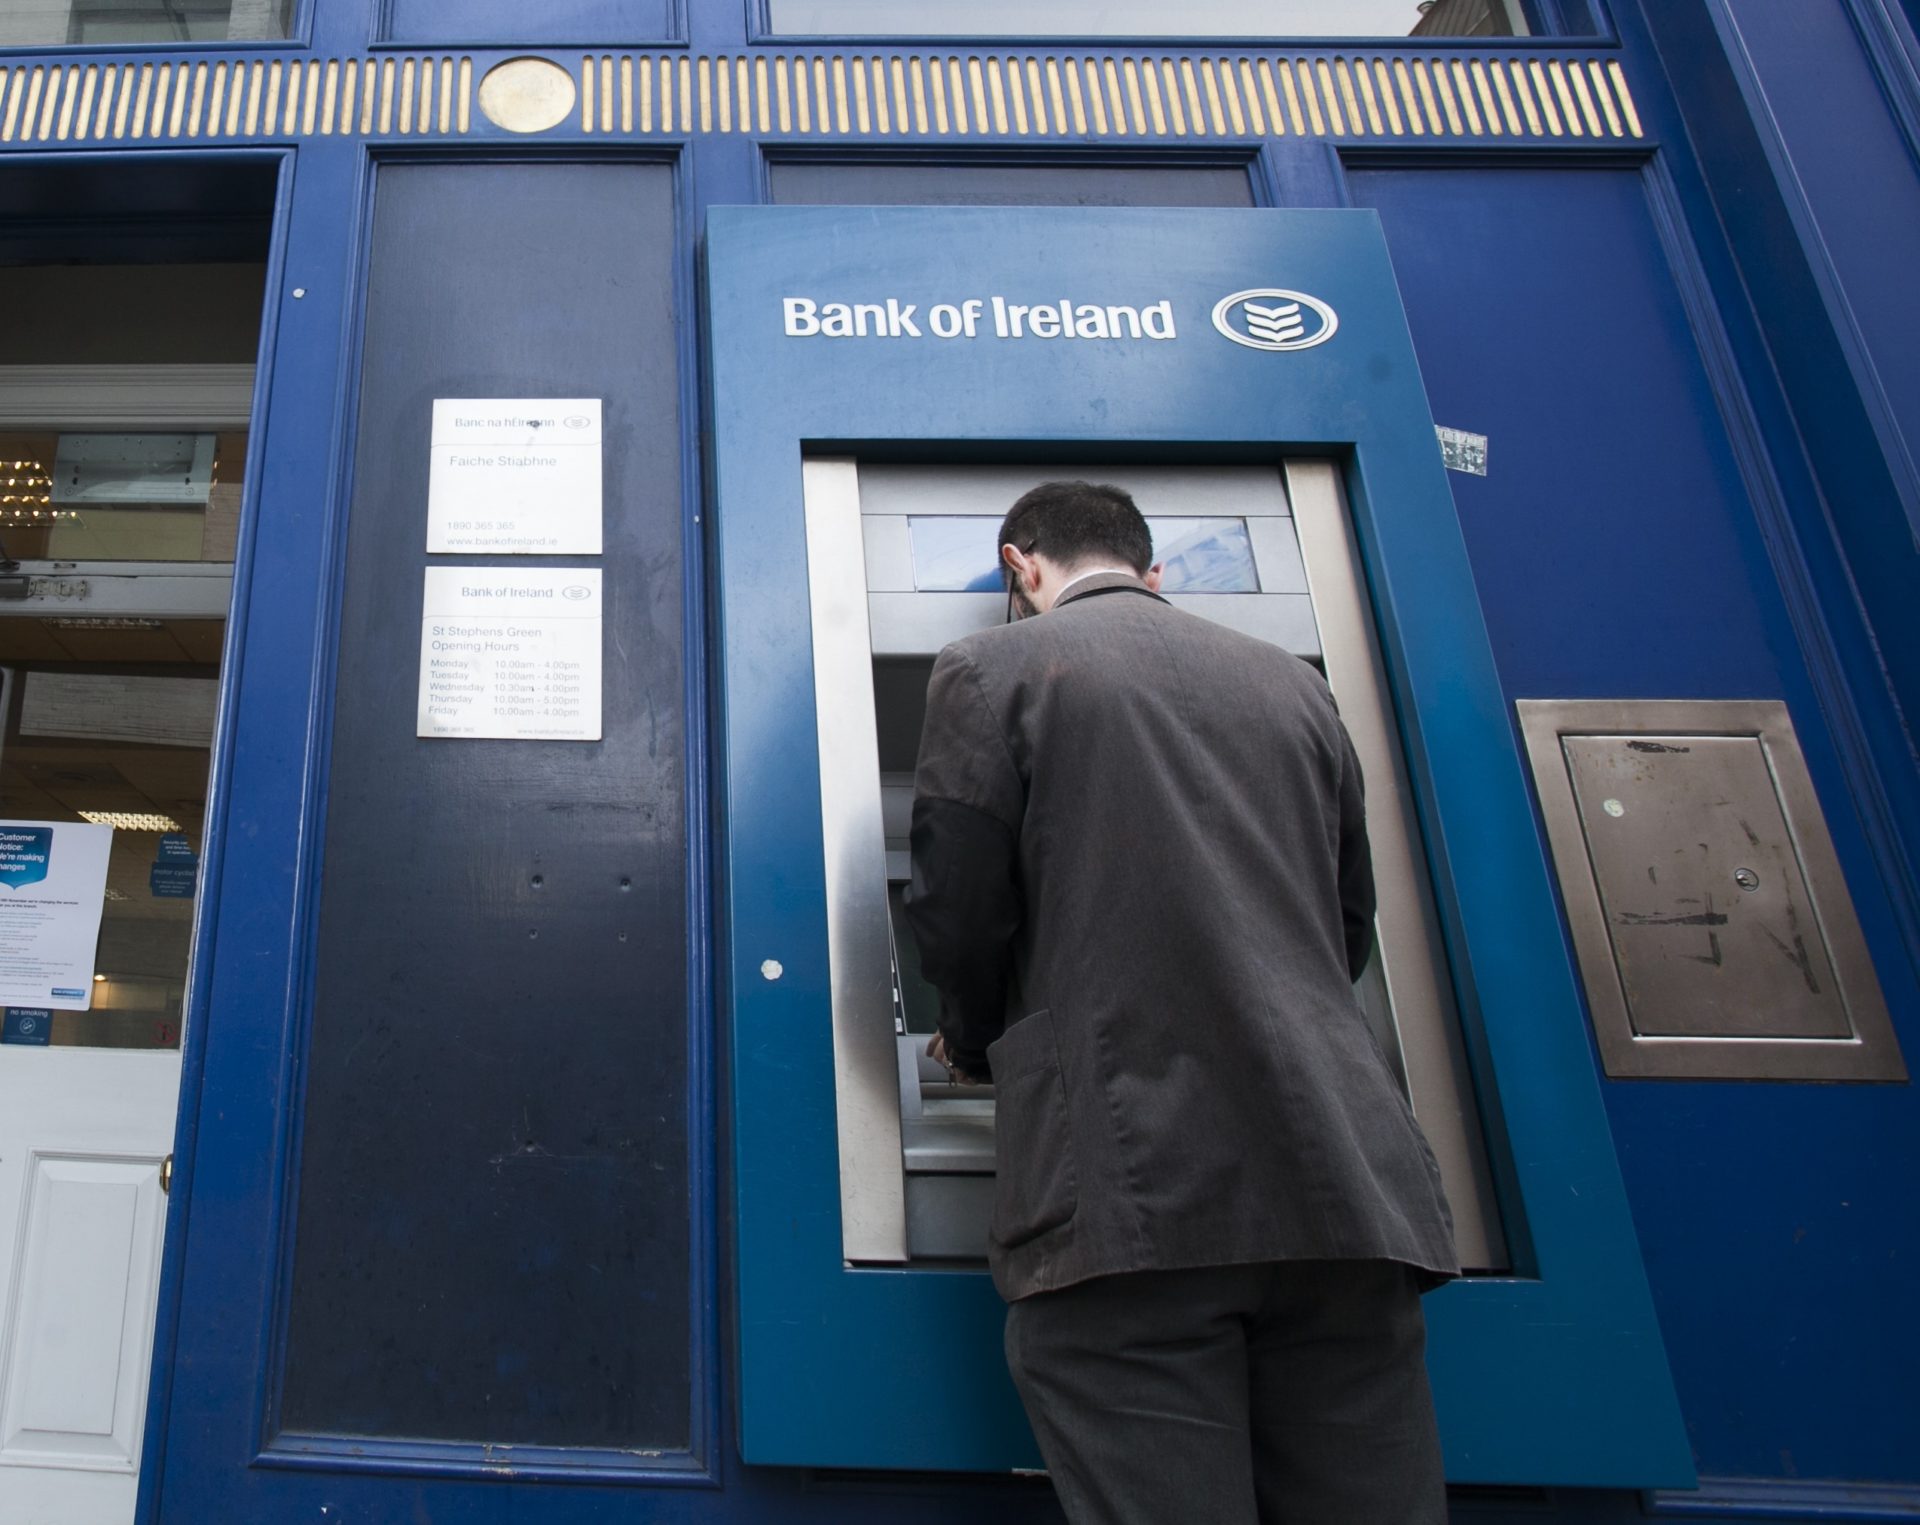 A Bank of Ireland ATM on Dublin's Stephen's Green, 30-10-15. 